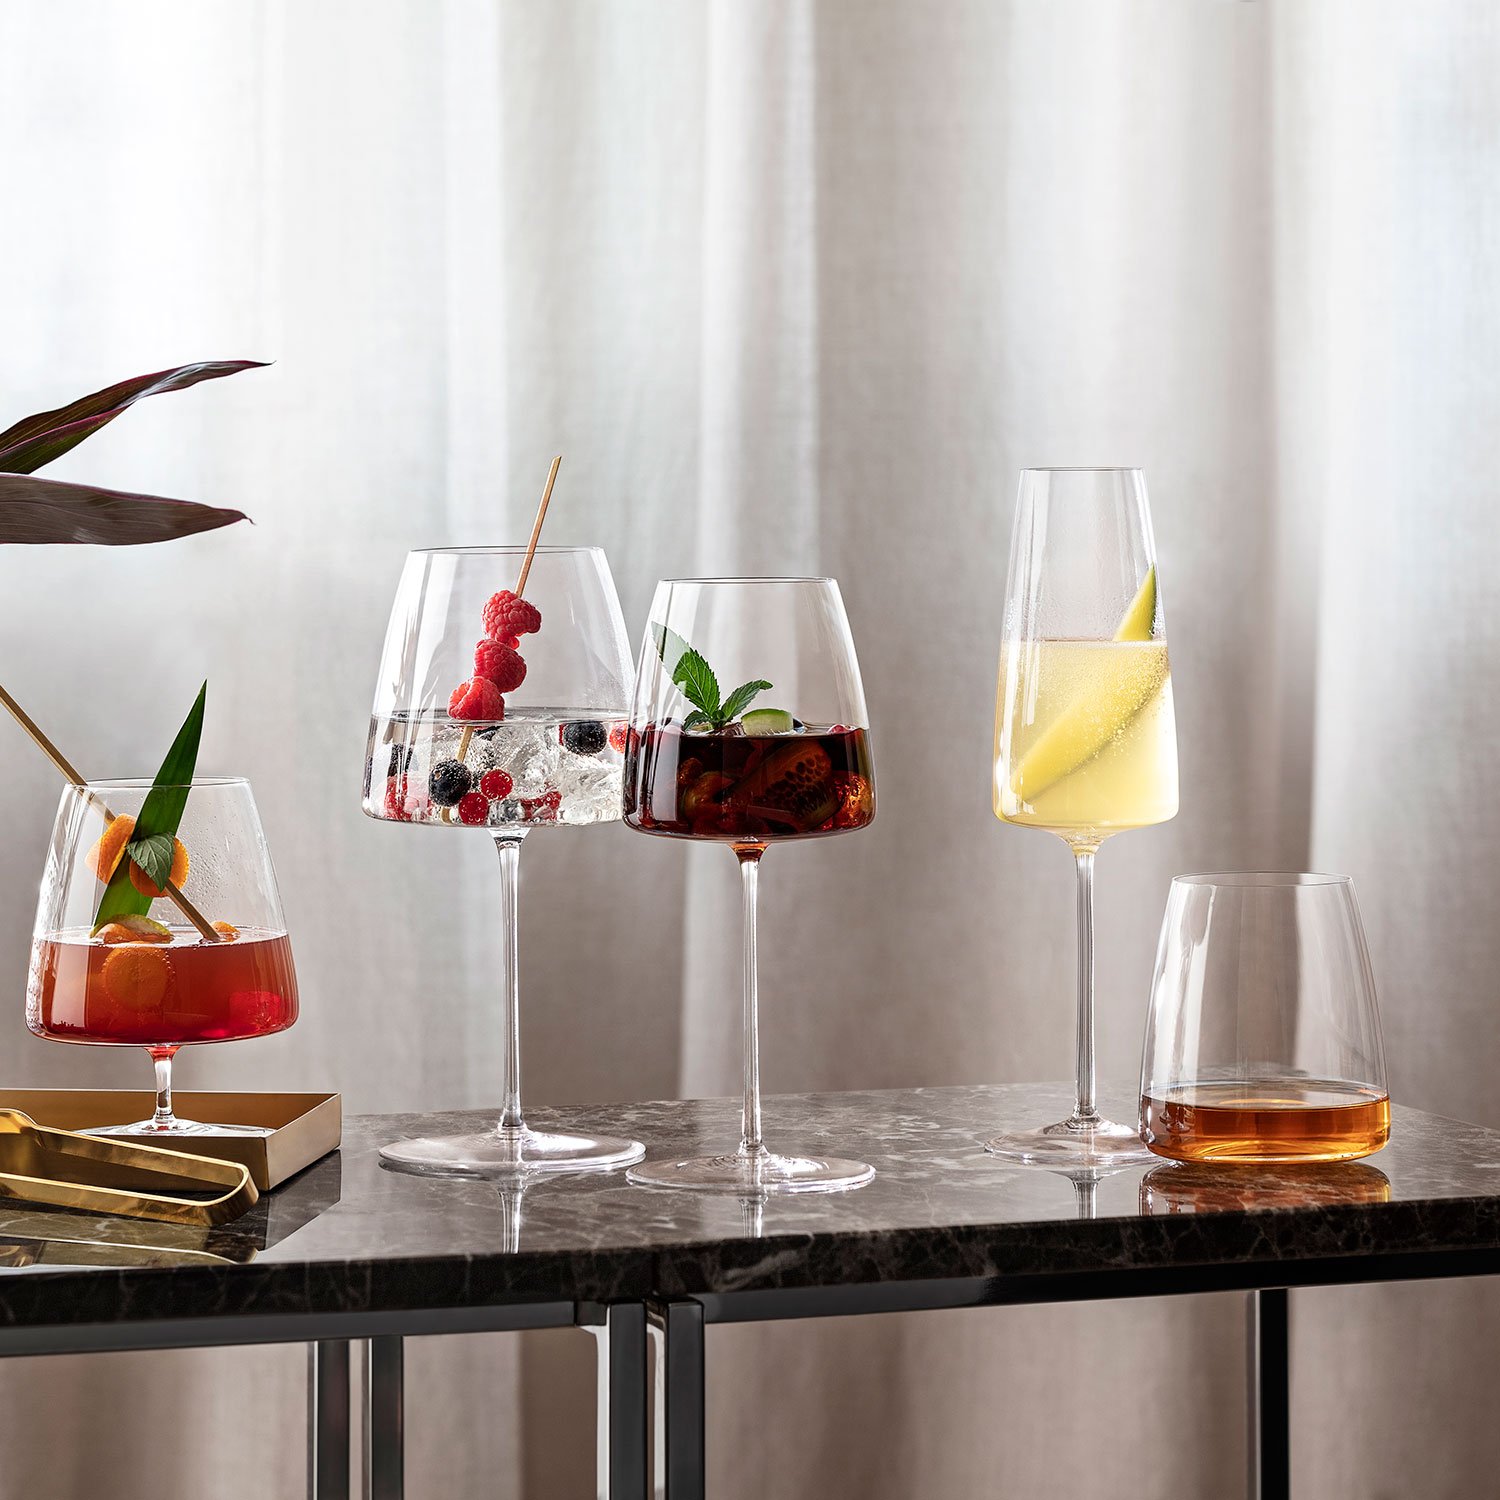 MetroChic Glass Набор бокалов для красного вина 2 шт, 830 мл, 24 см Villeroy & Boch
https://spb.v-b.ru
г.Санкт-Петербург
eshop@v-b.spb.ru
+7(812)3801977